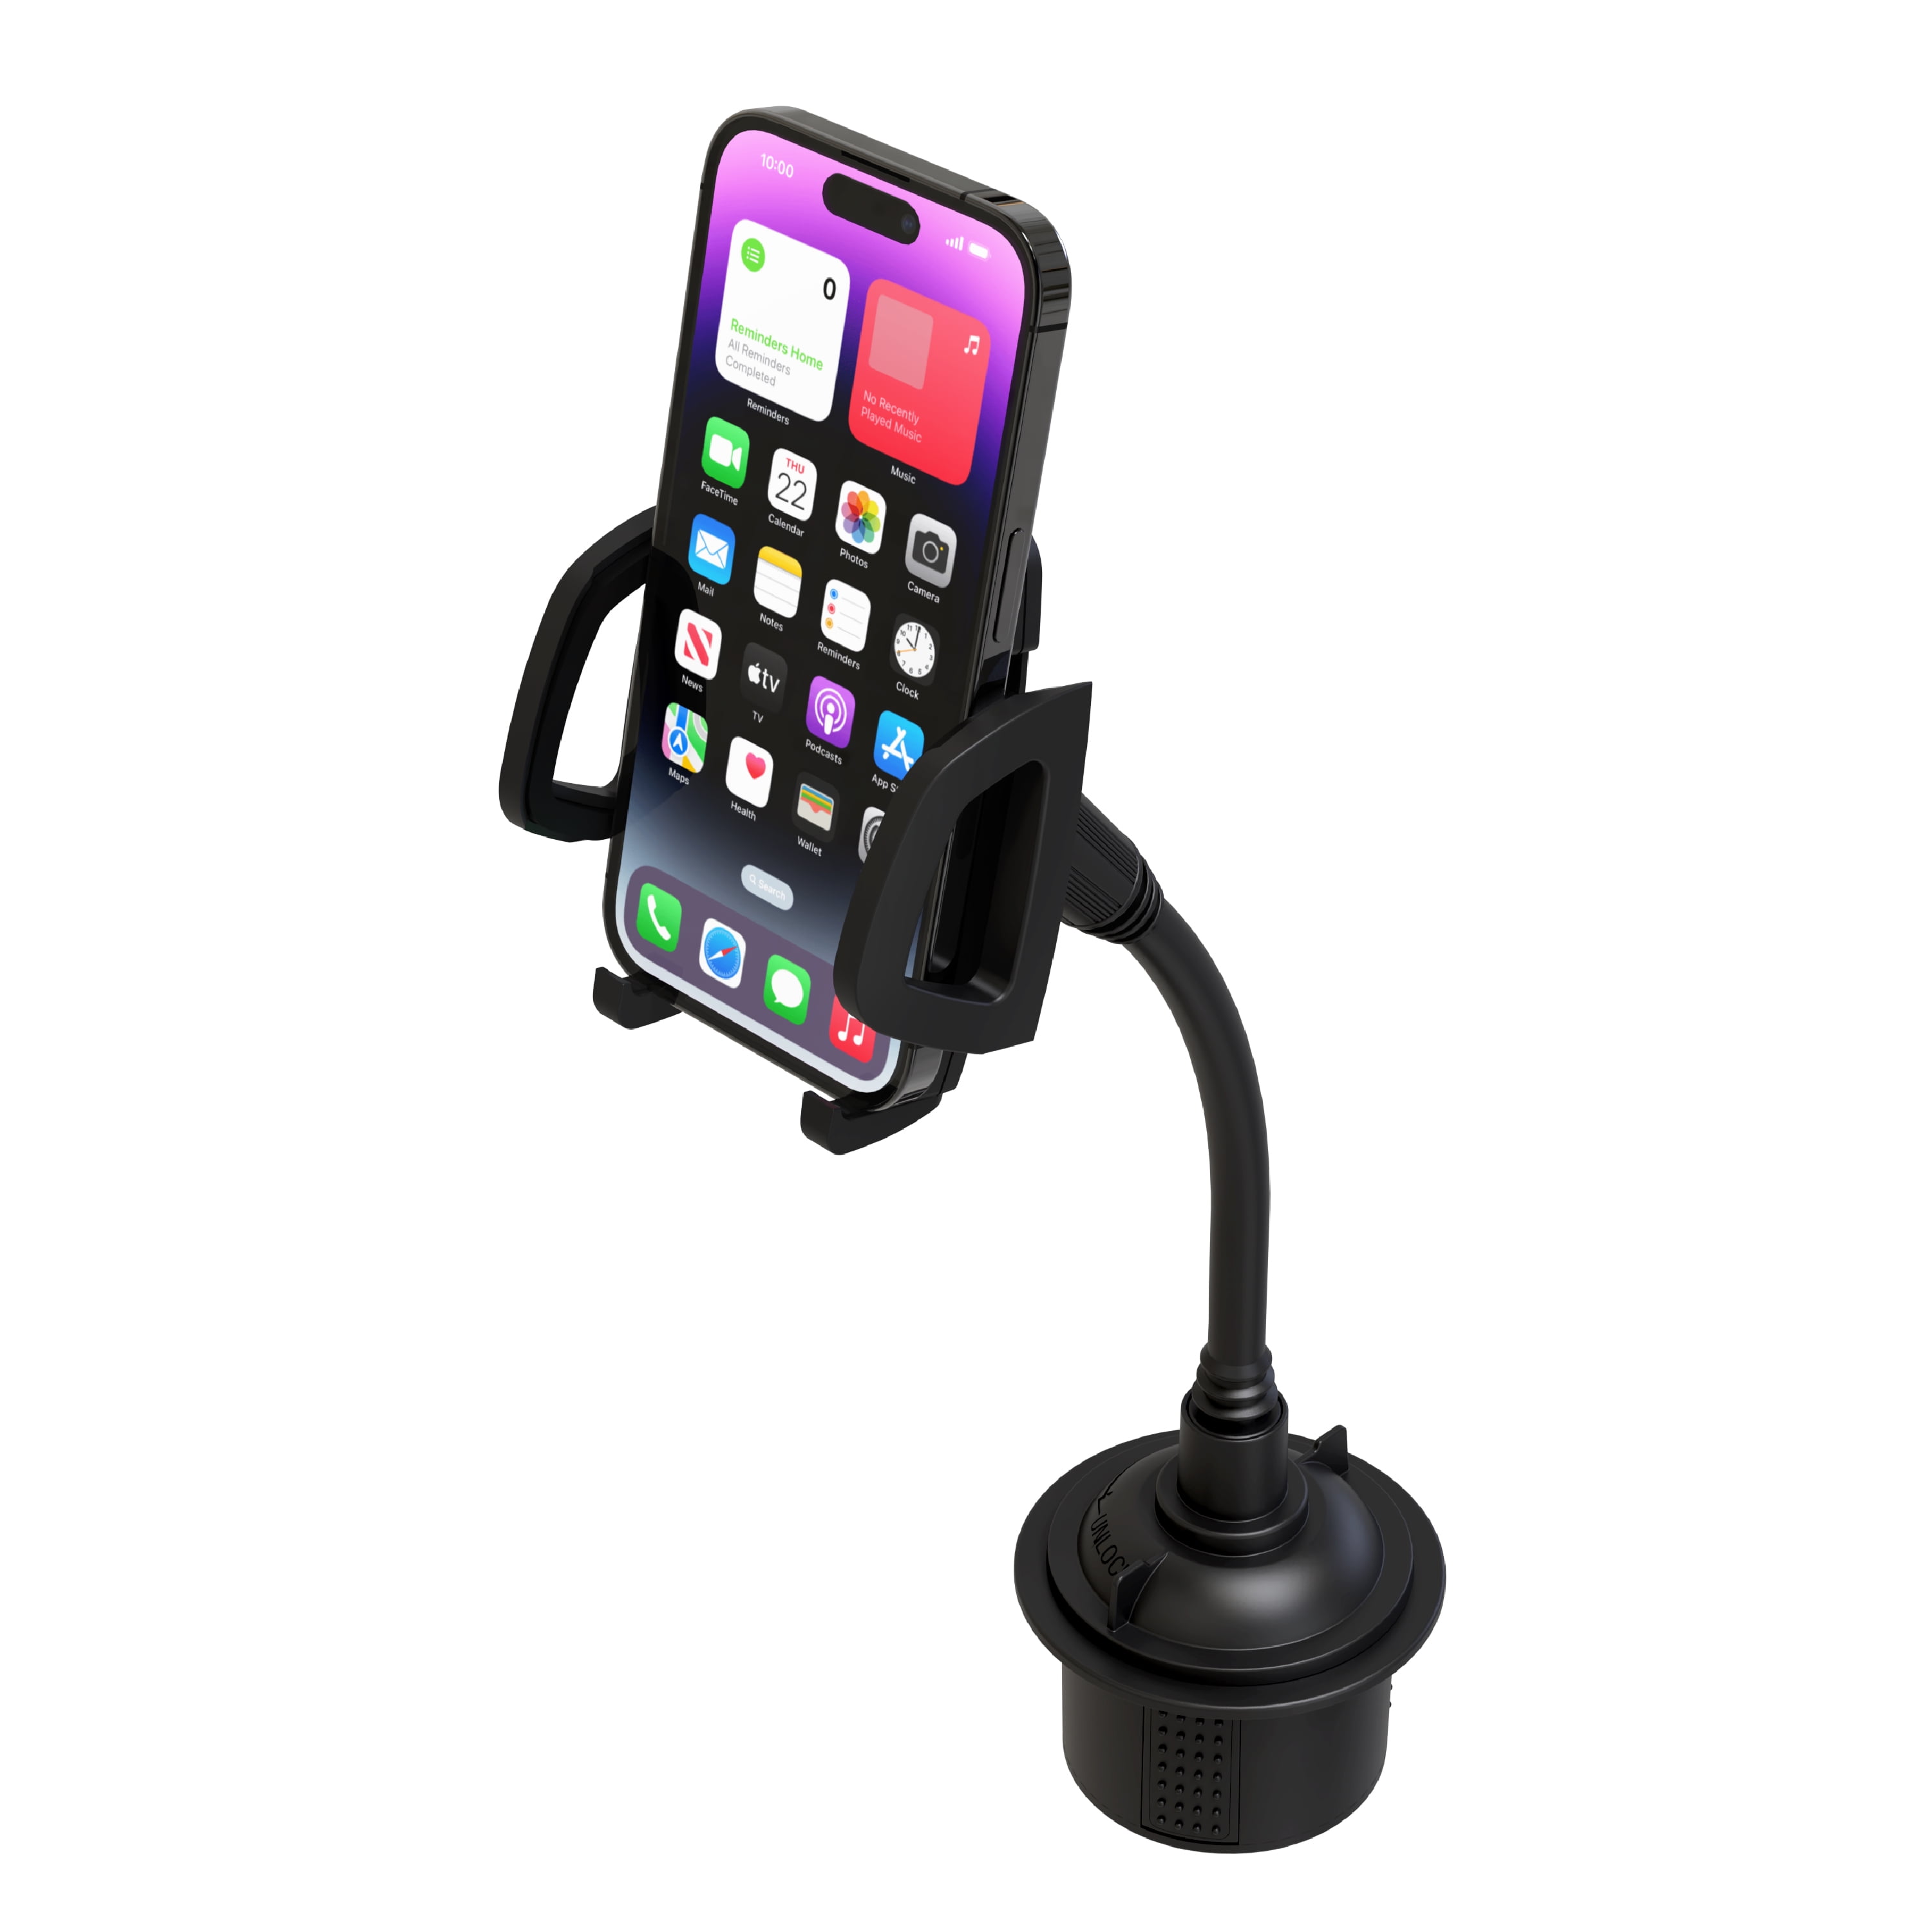 Flexview Auto Cup Holder Phone Mount, Fully Adjustable Gooseneck